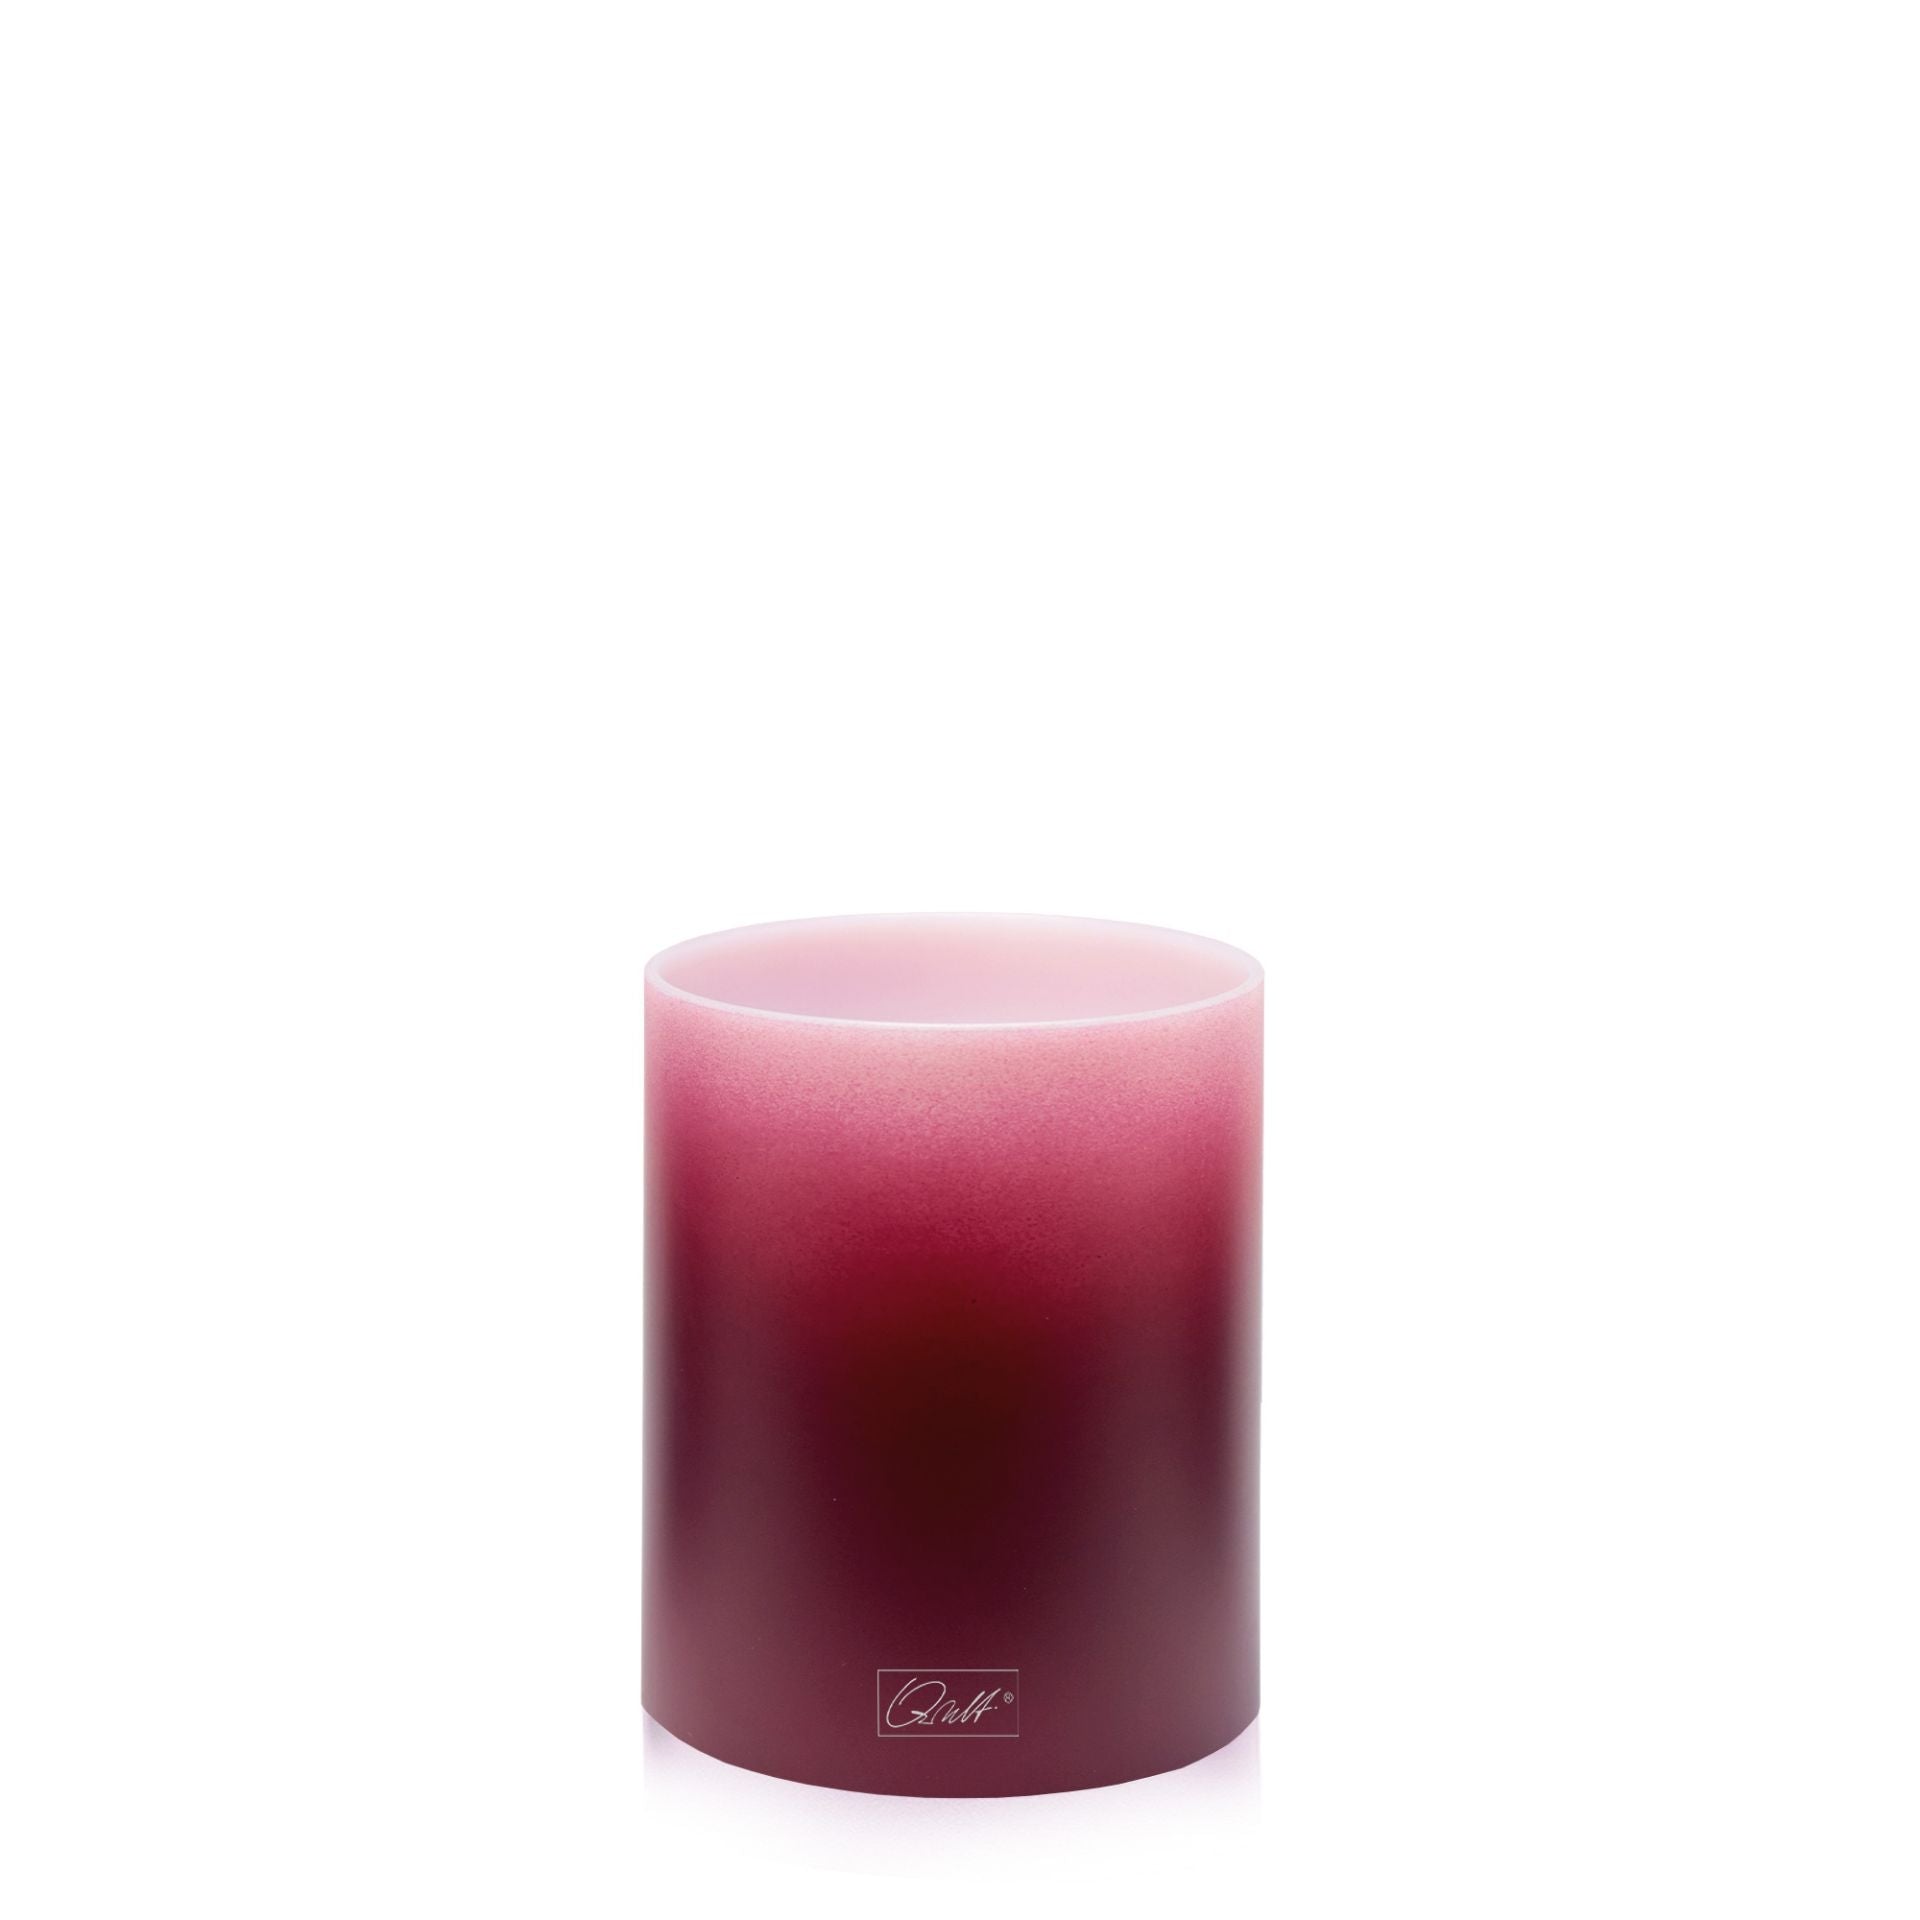 Kaufen black-berry Qult Inside Teelichthalter in Kerzenform Color Ø 8 cm